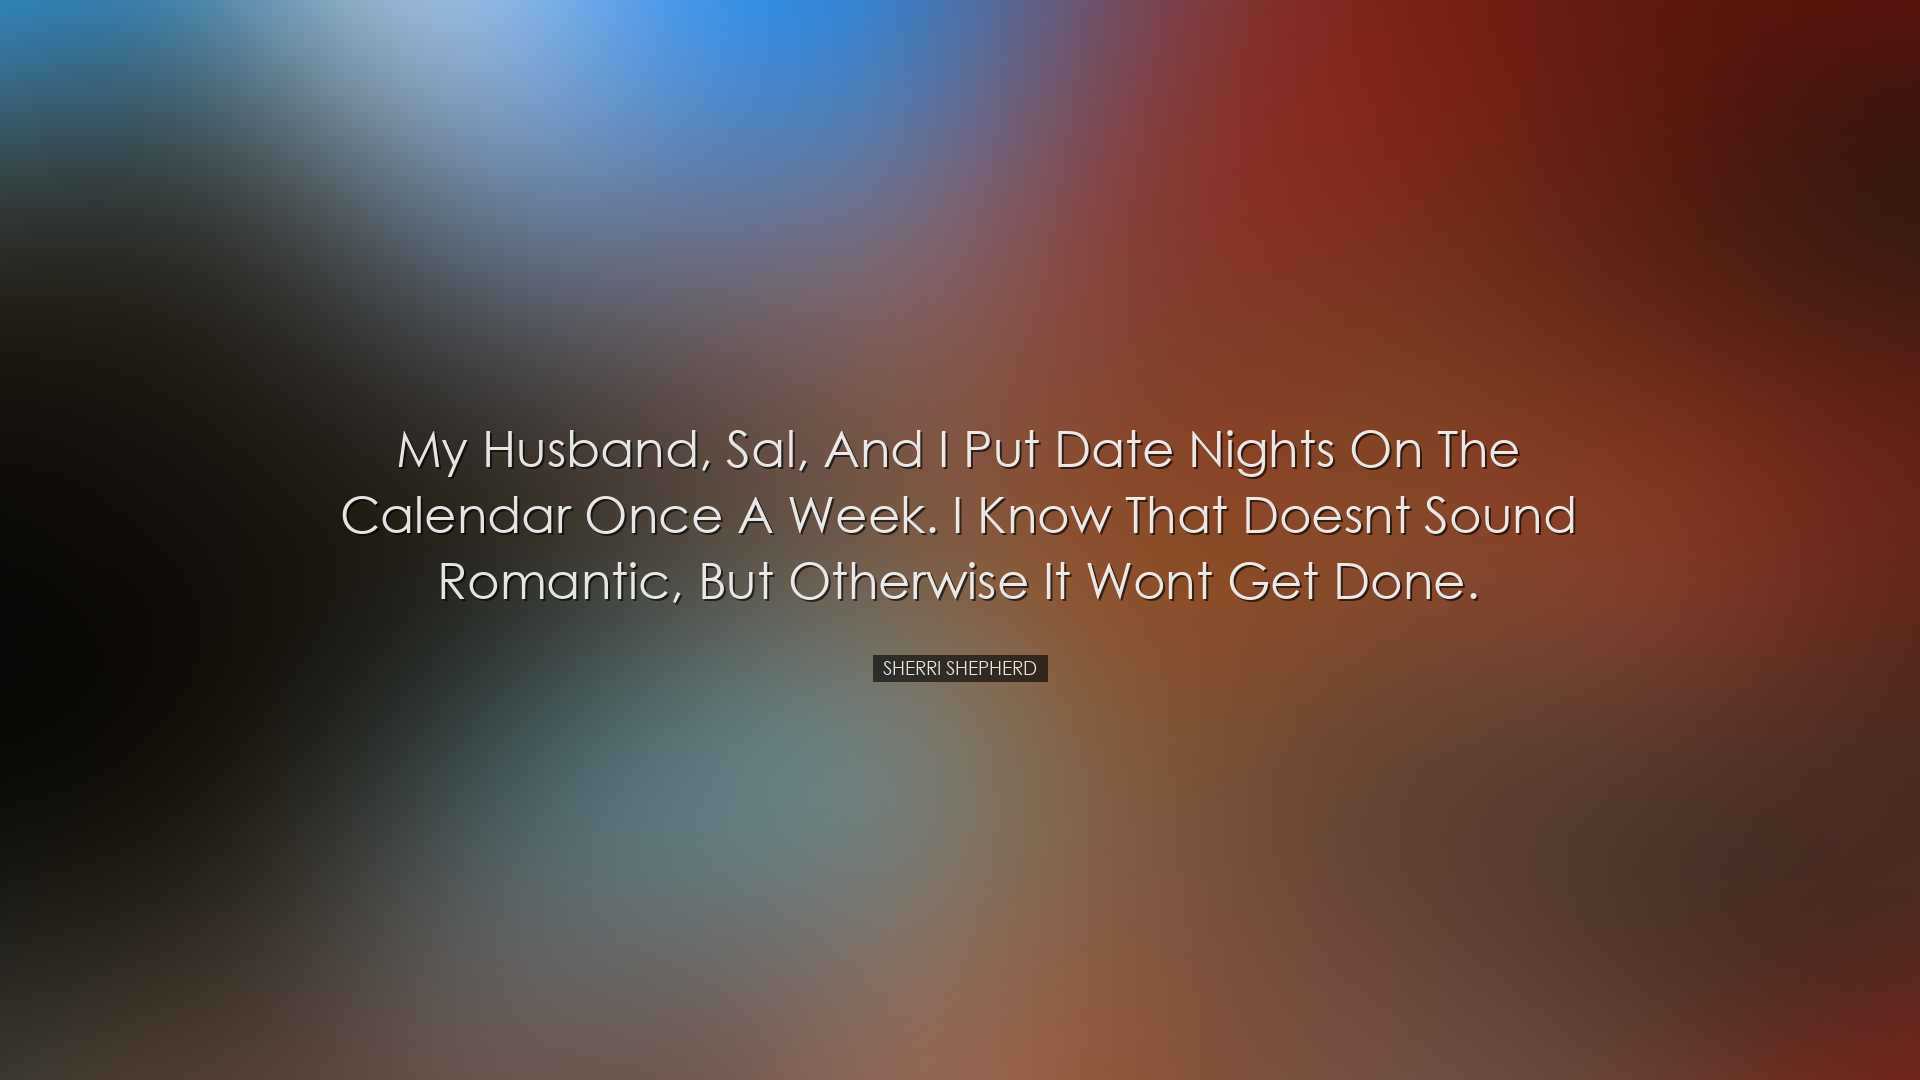 My husband, Sal, and I put date nights on the calendar once a week